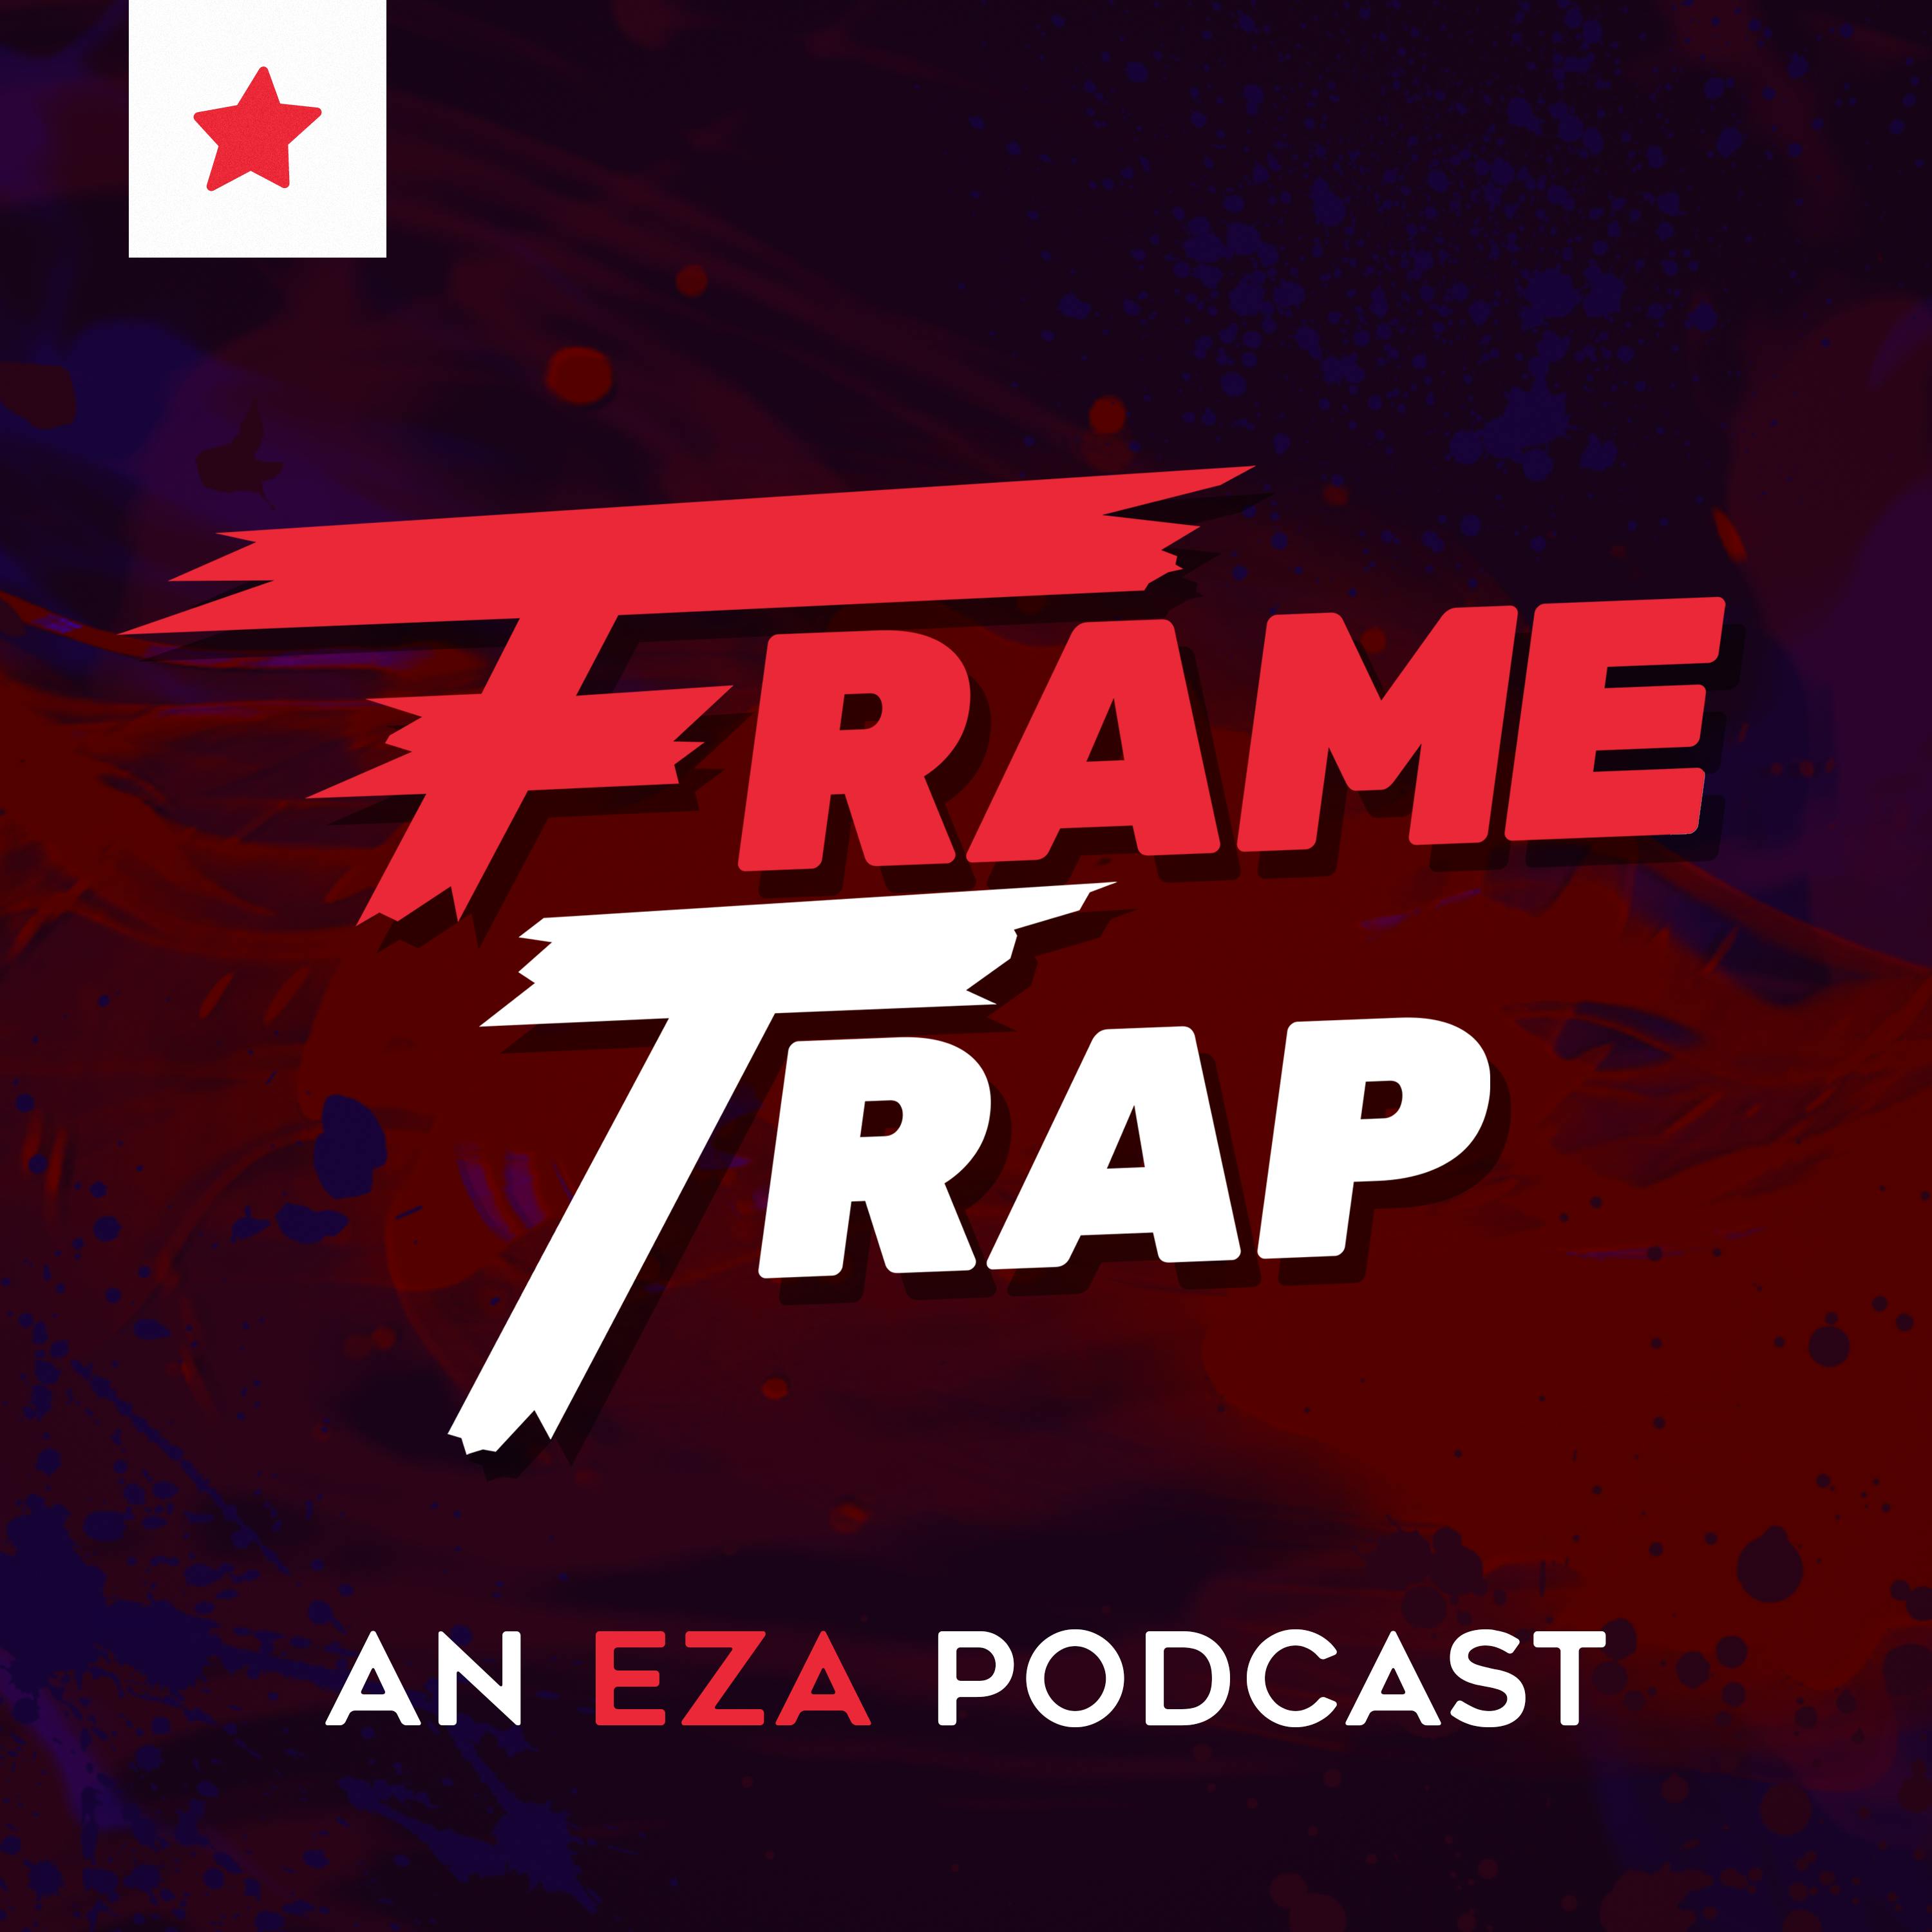 Frame Trap - Episode 177 